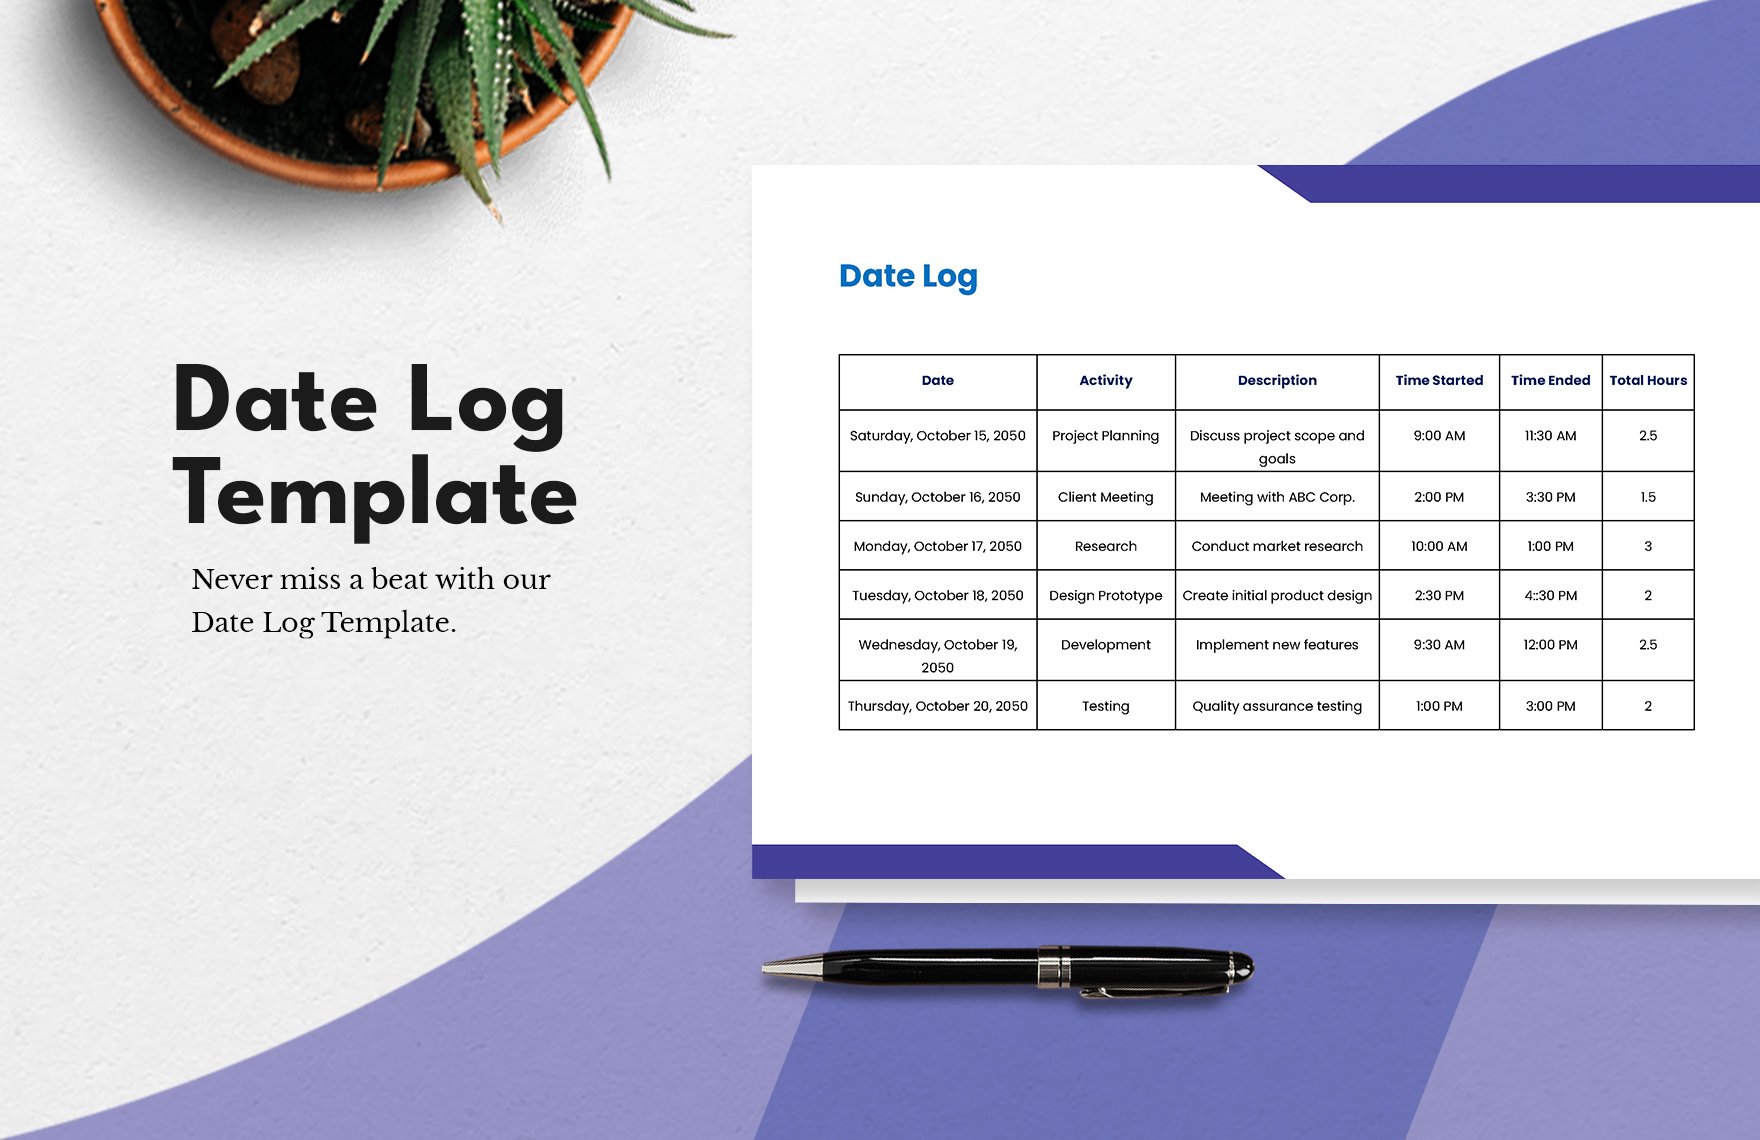 Date Log Template